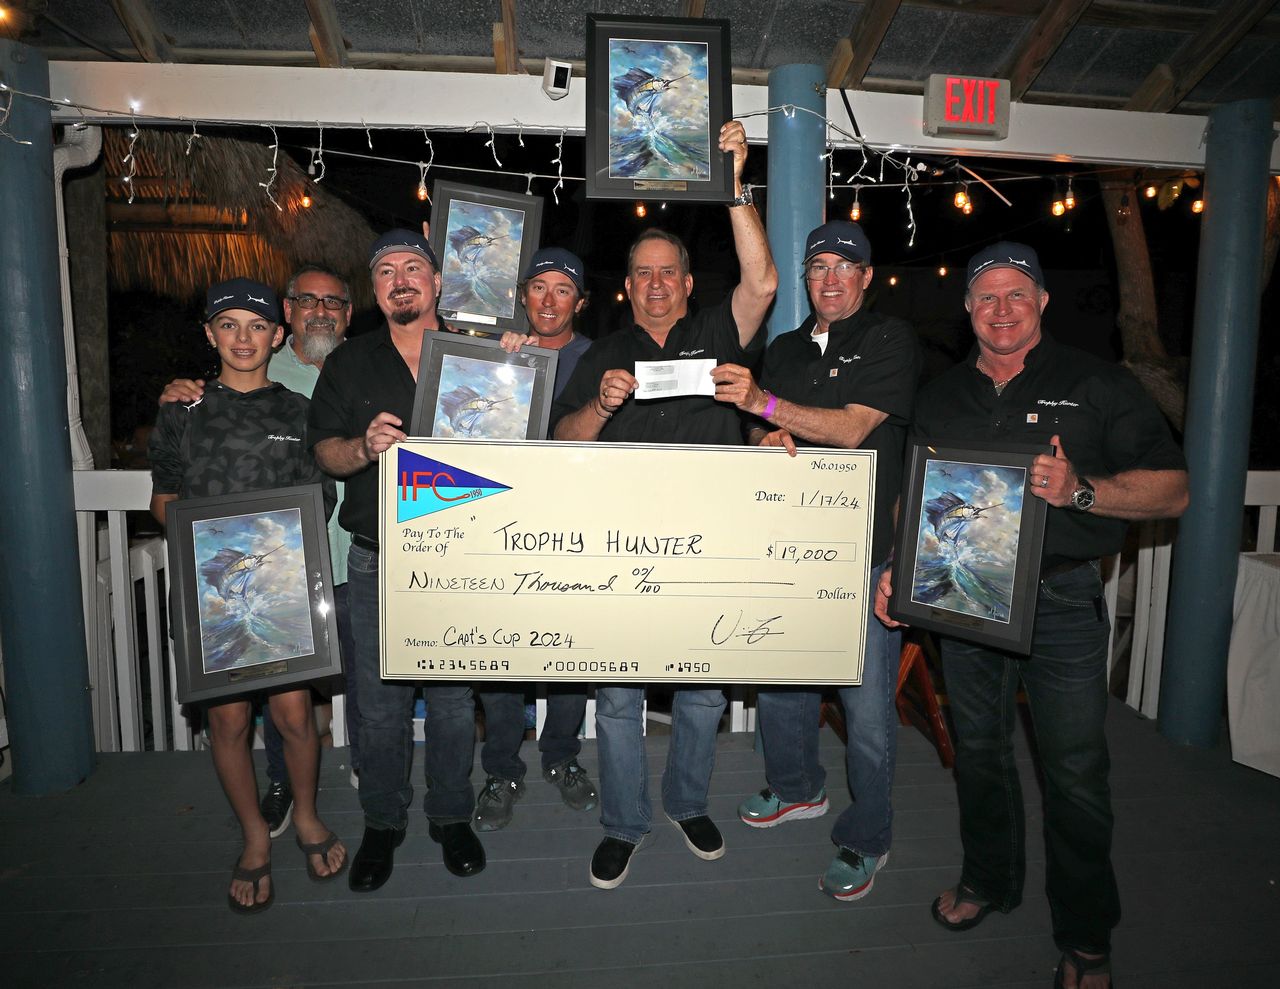 Captain Brian Cone lead team Trophy Hunter to the win of the Islamorada Fishing Club Captain's Cup Sailfish Tournament with five sailfish releases. Photo: Tim Rahn